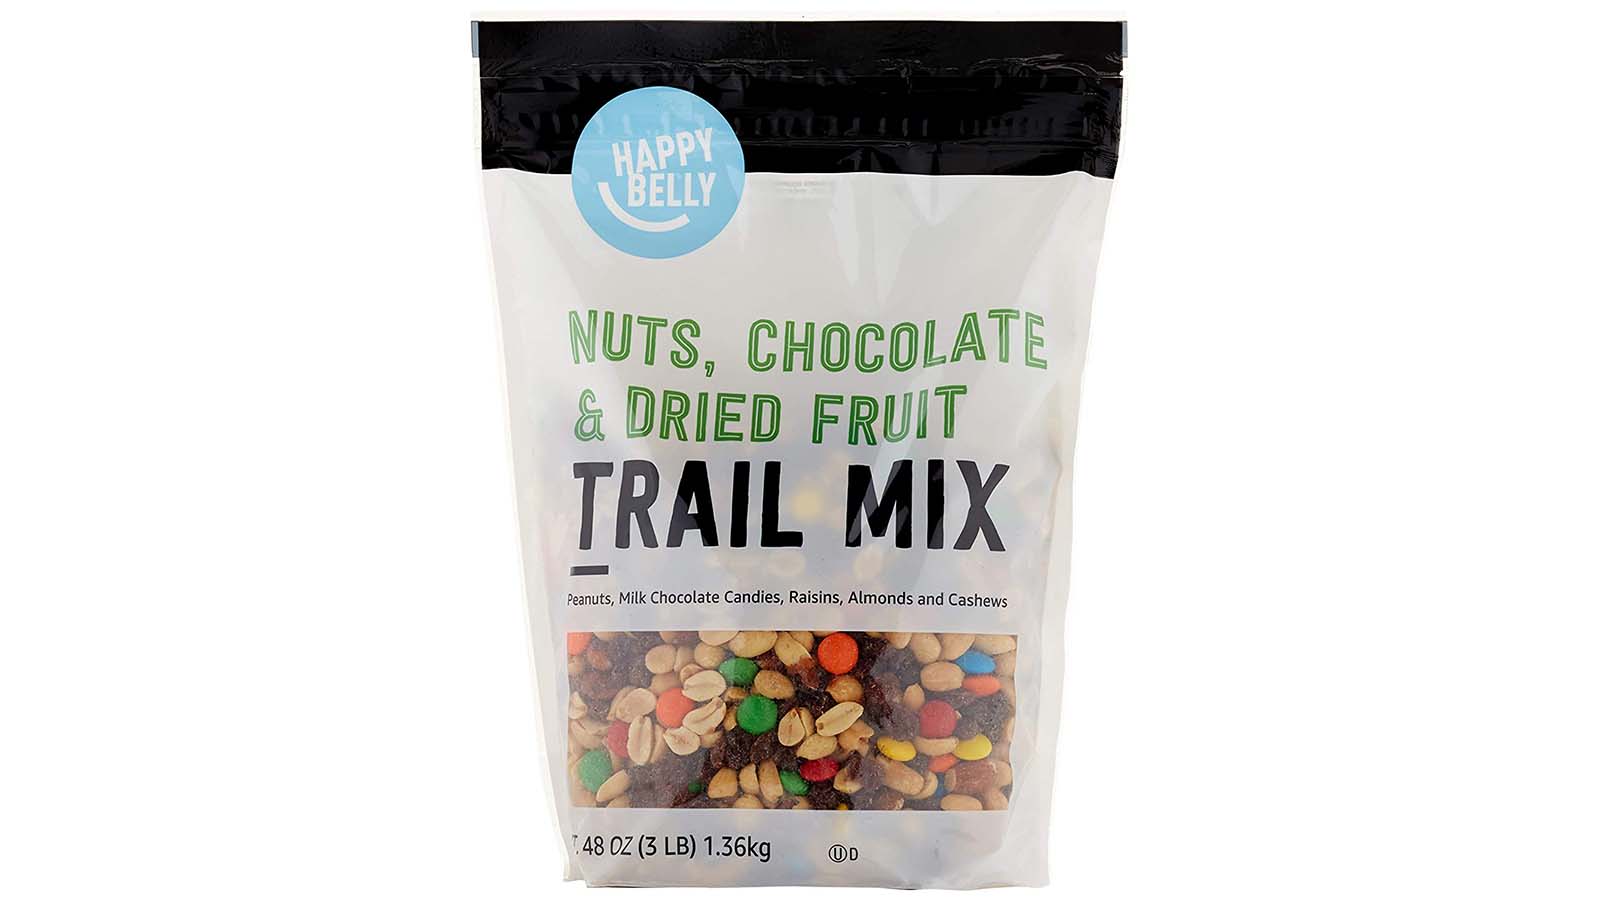 https://media.cnn.com/api/v1/images/stellar/prod/underscored-travelsnacks-happy-belly-nuts-chocolate-dried-fruit-trail-mix.jpg?q=h_900,w_1600,x_0,y_0